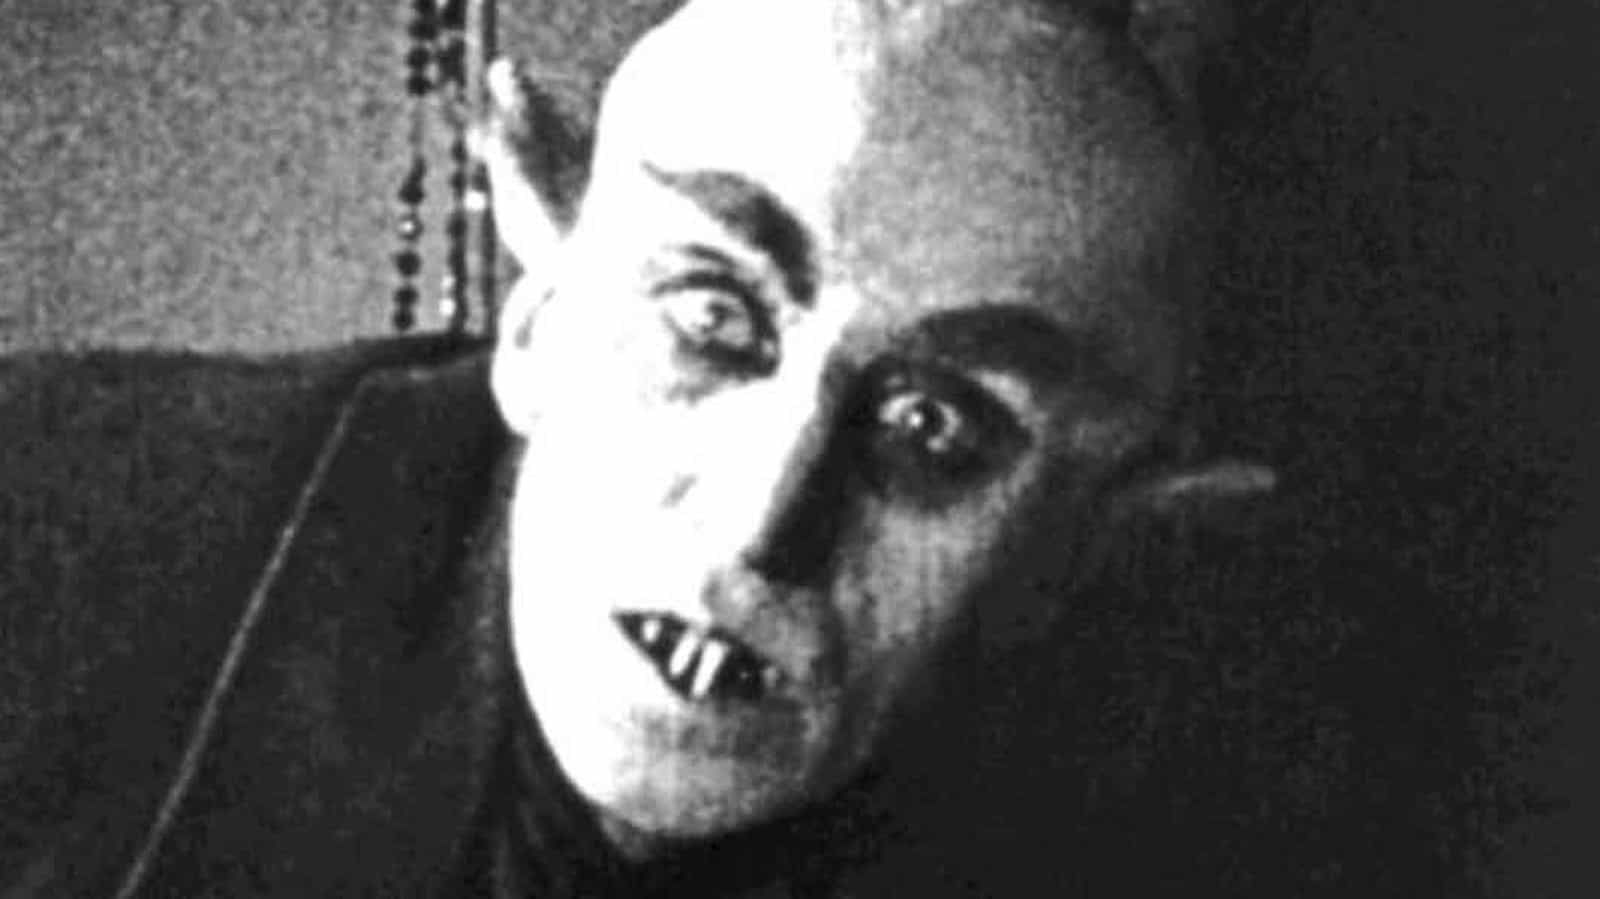 Nosferatu The First Vampire Movie Still Scares Years Later